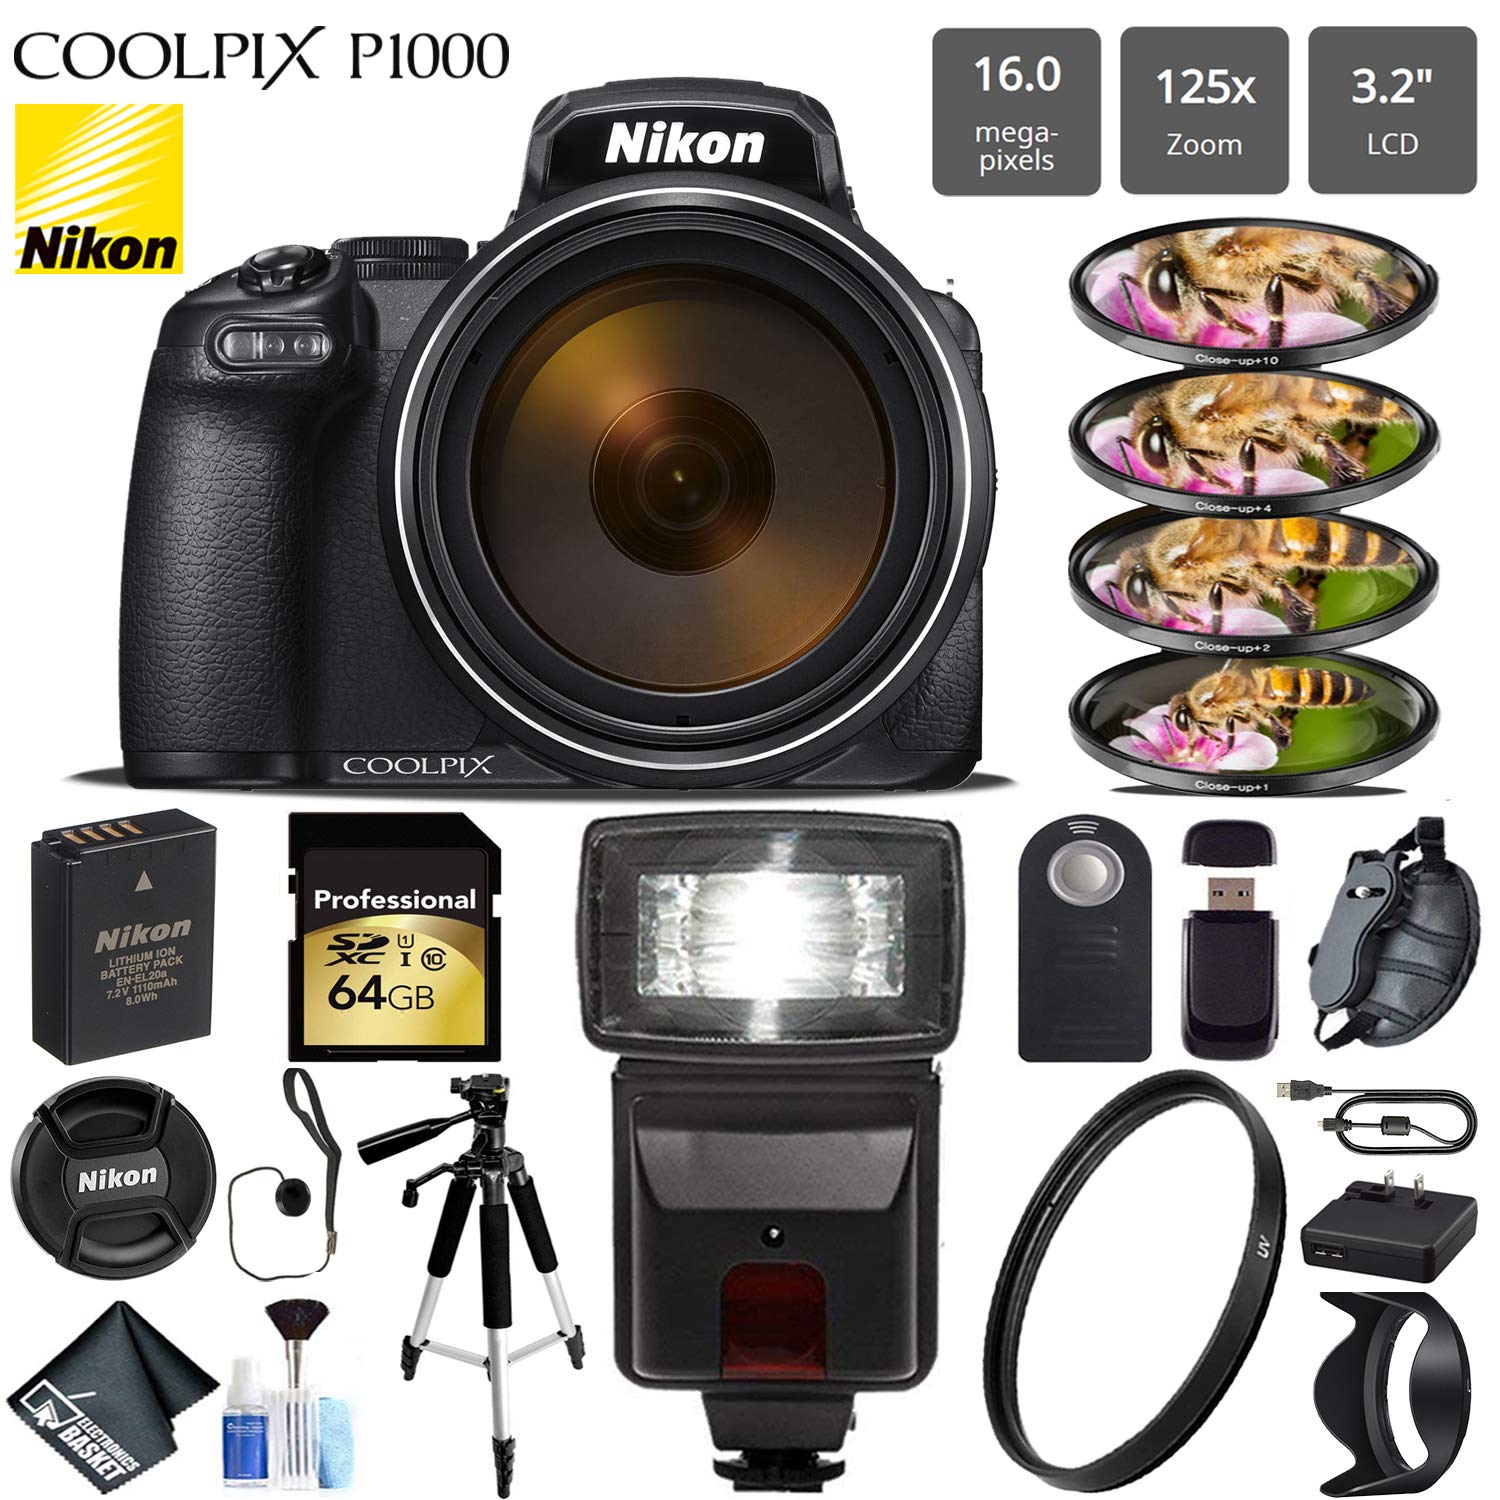 Nikon COOLPIX P1000 Digital Camera 16MP 125x Optical Zoom & Build in Wi-Fi + Slave Flash + Macro Filter Kit + UV Protection Filter + Wireless Remote + Tripod - (Intl Model)